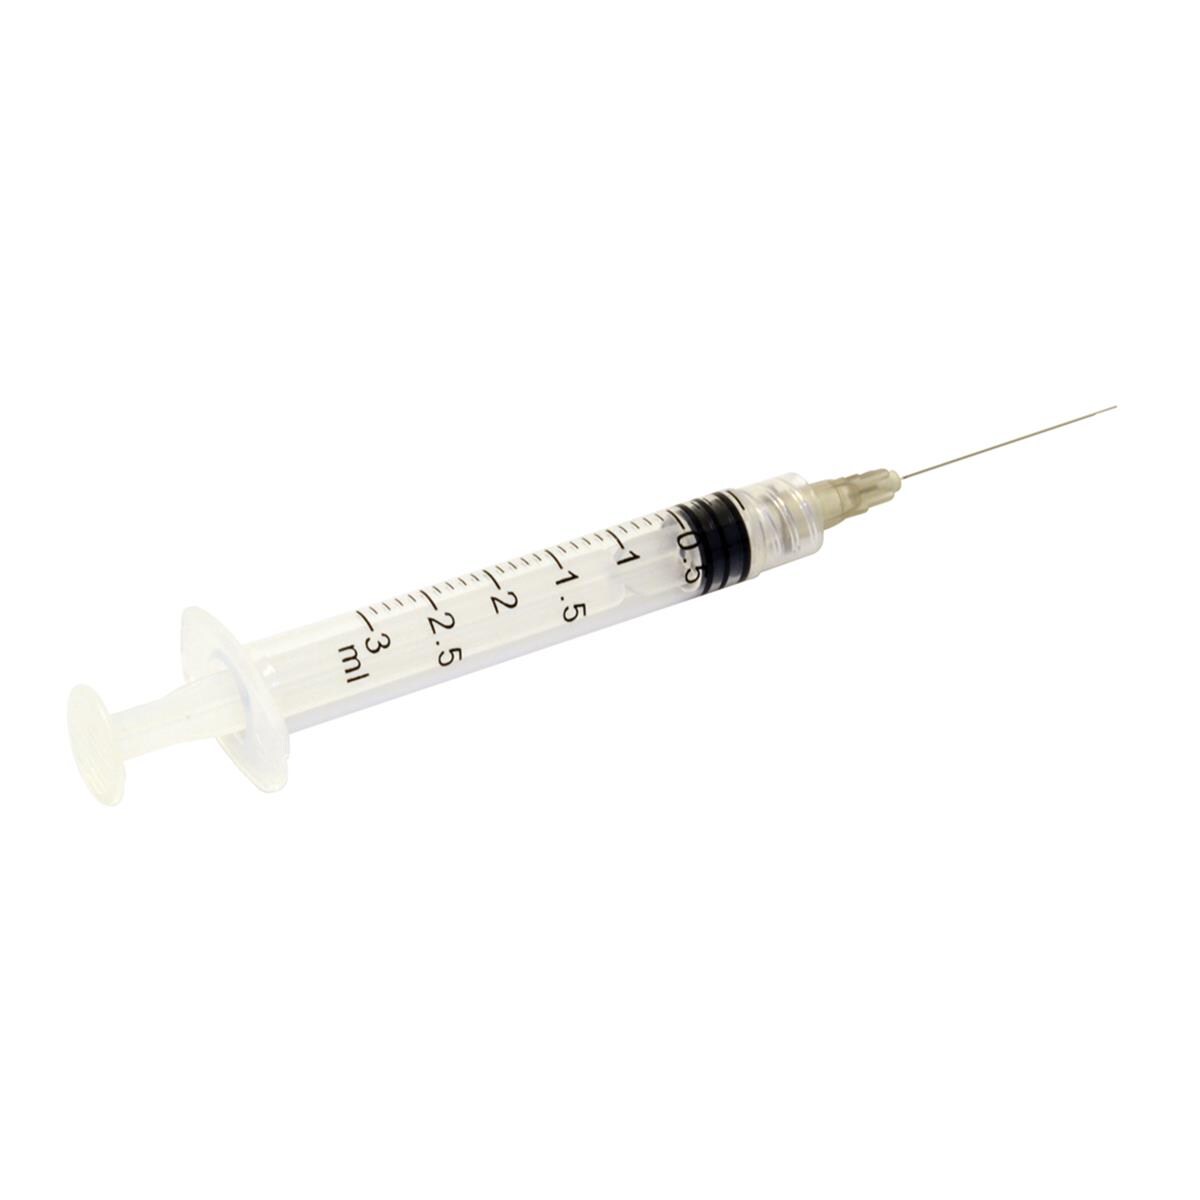 DEHP Endo Syringe Irrigation Needle Sterile 27g 100pk